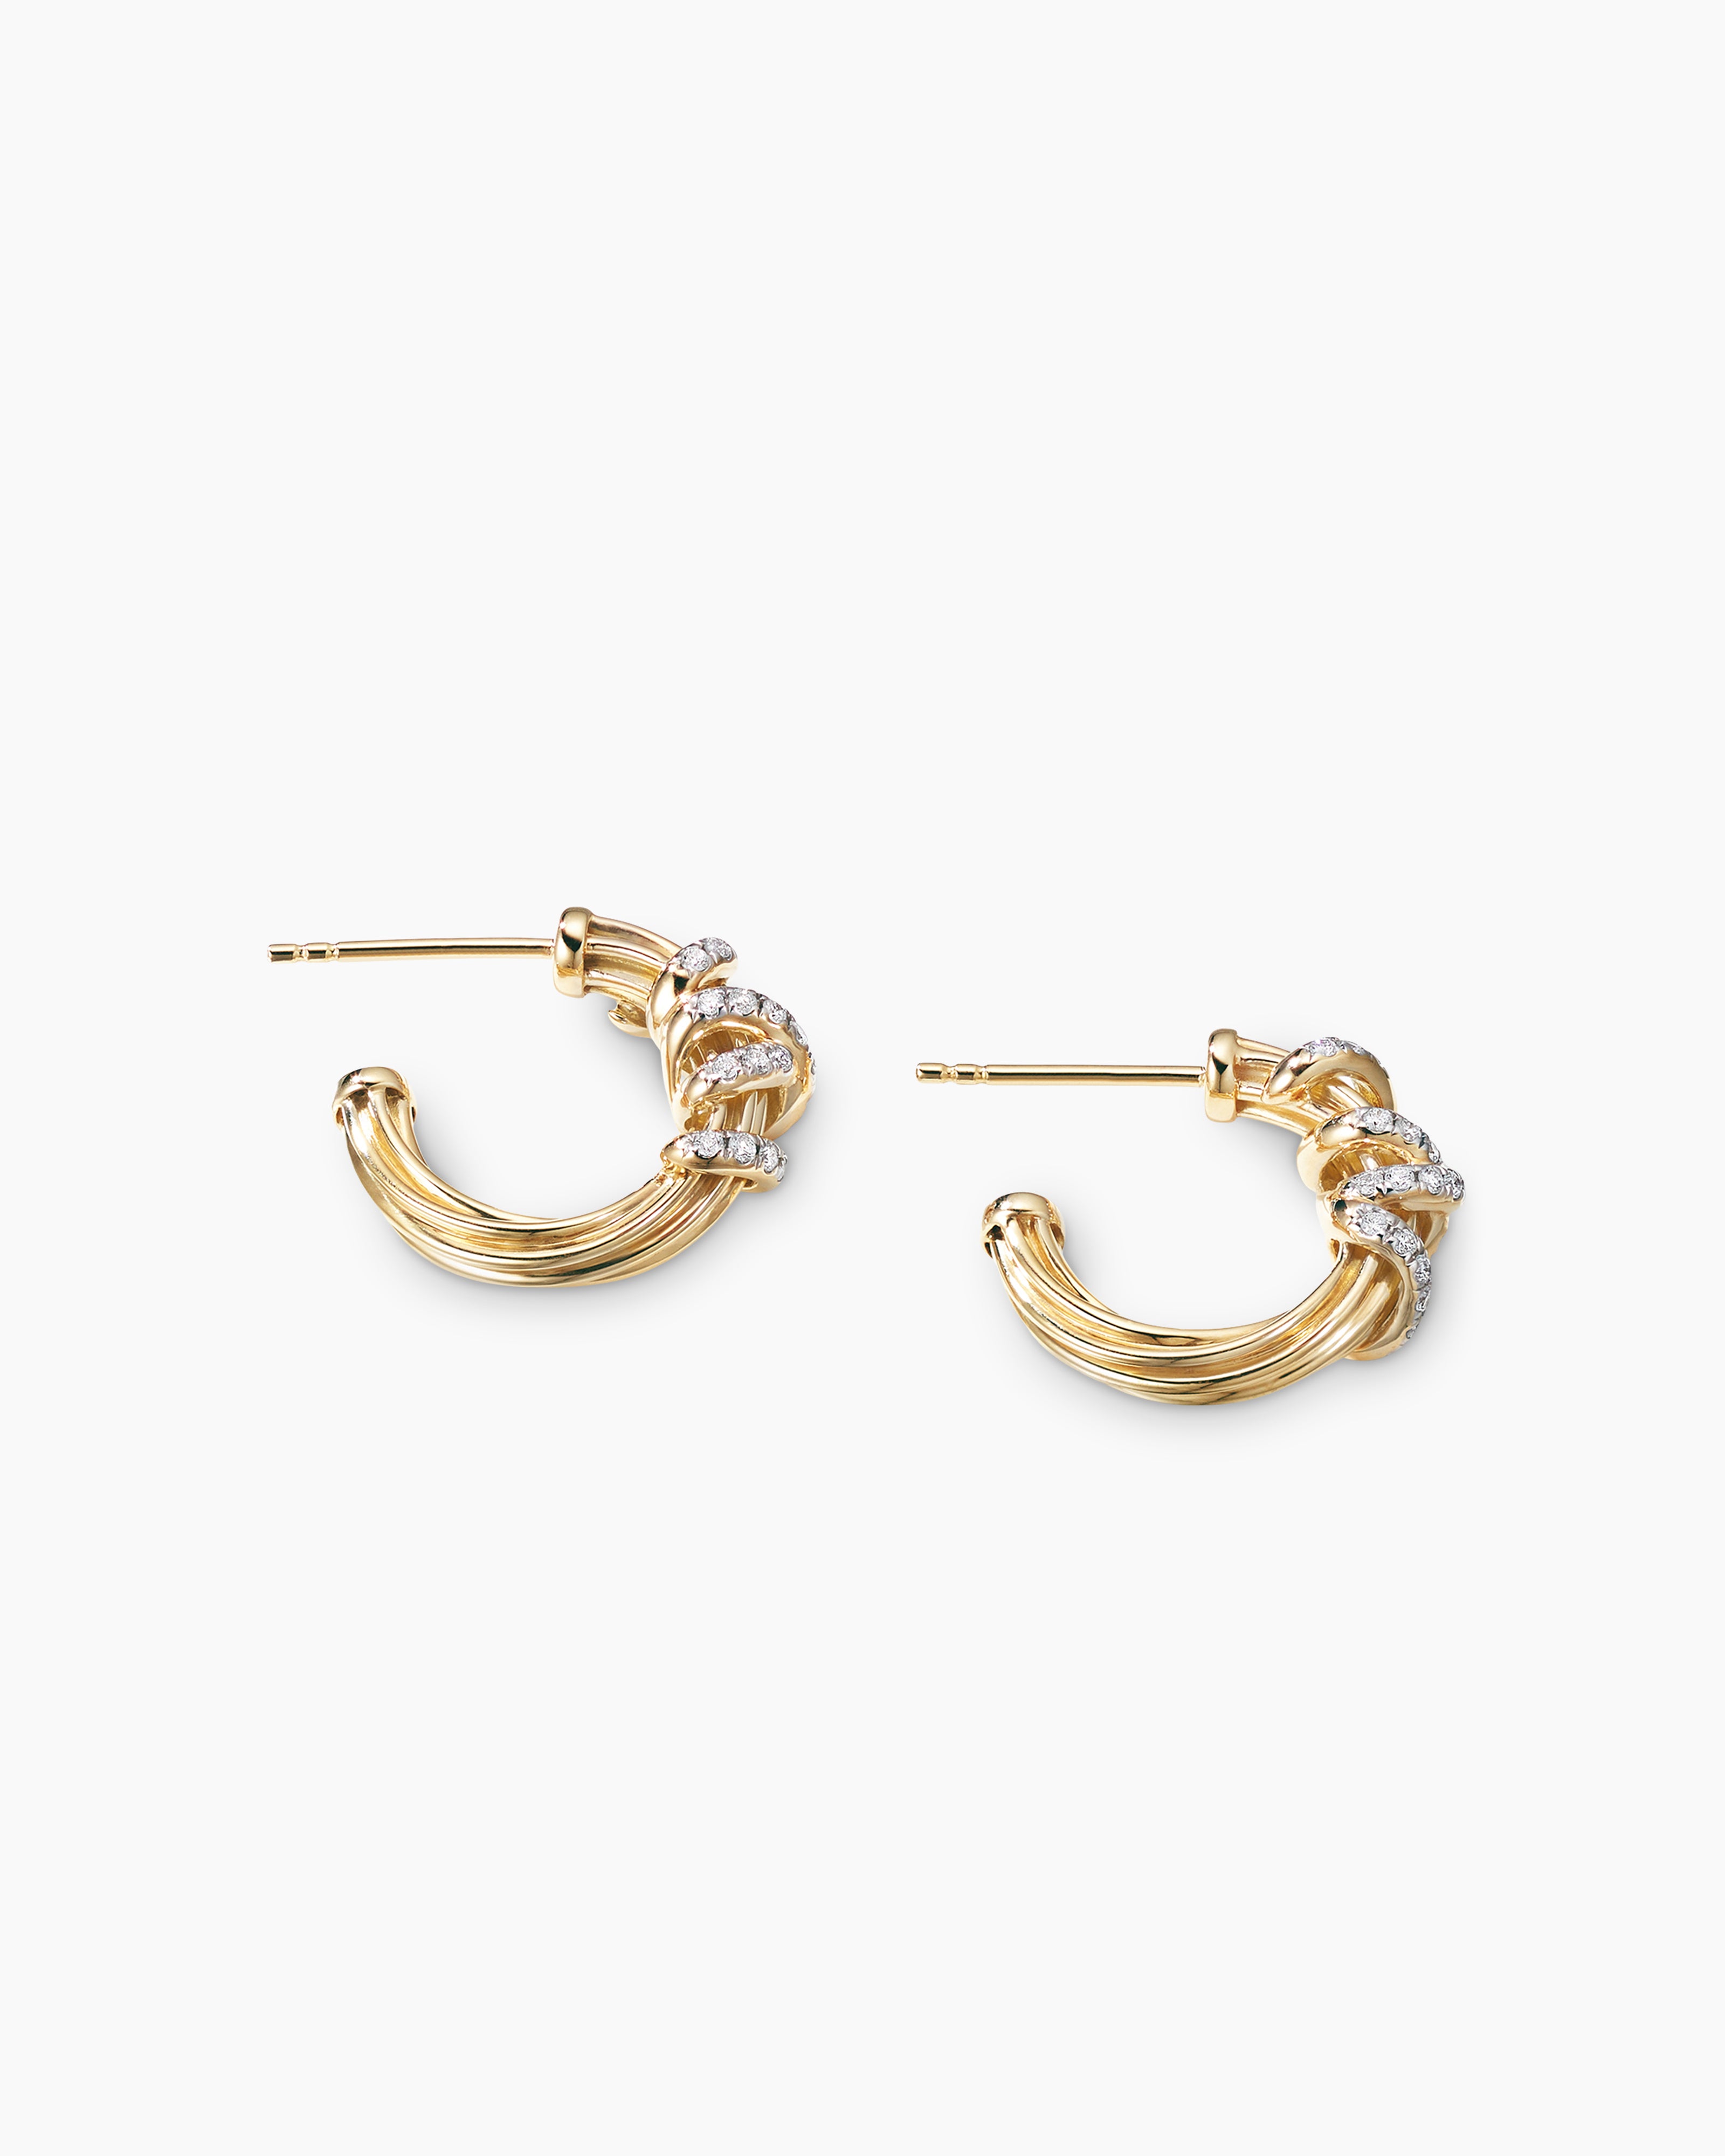 Infinity Hoop Earrings in 18K Yellow Gold with Diamonds, 42mm